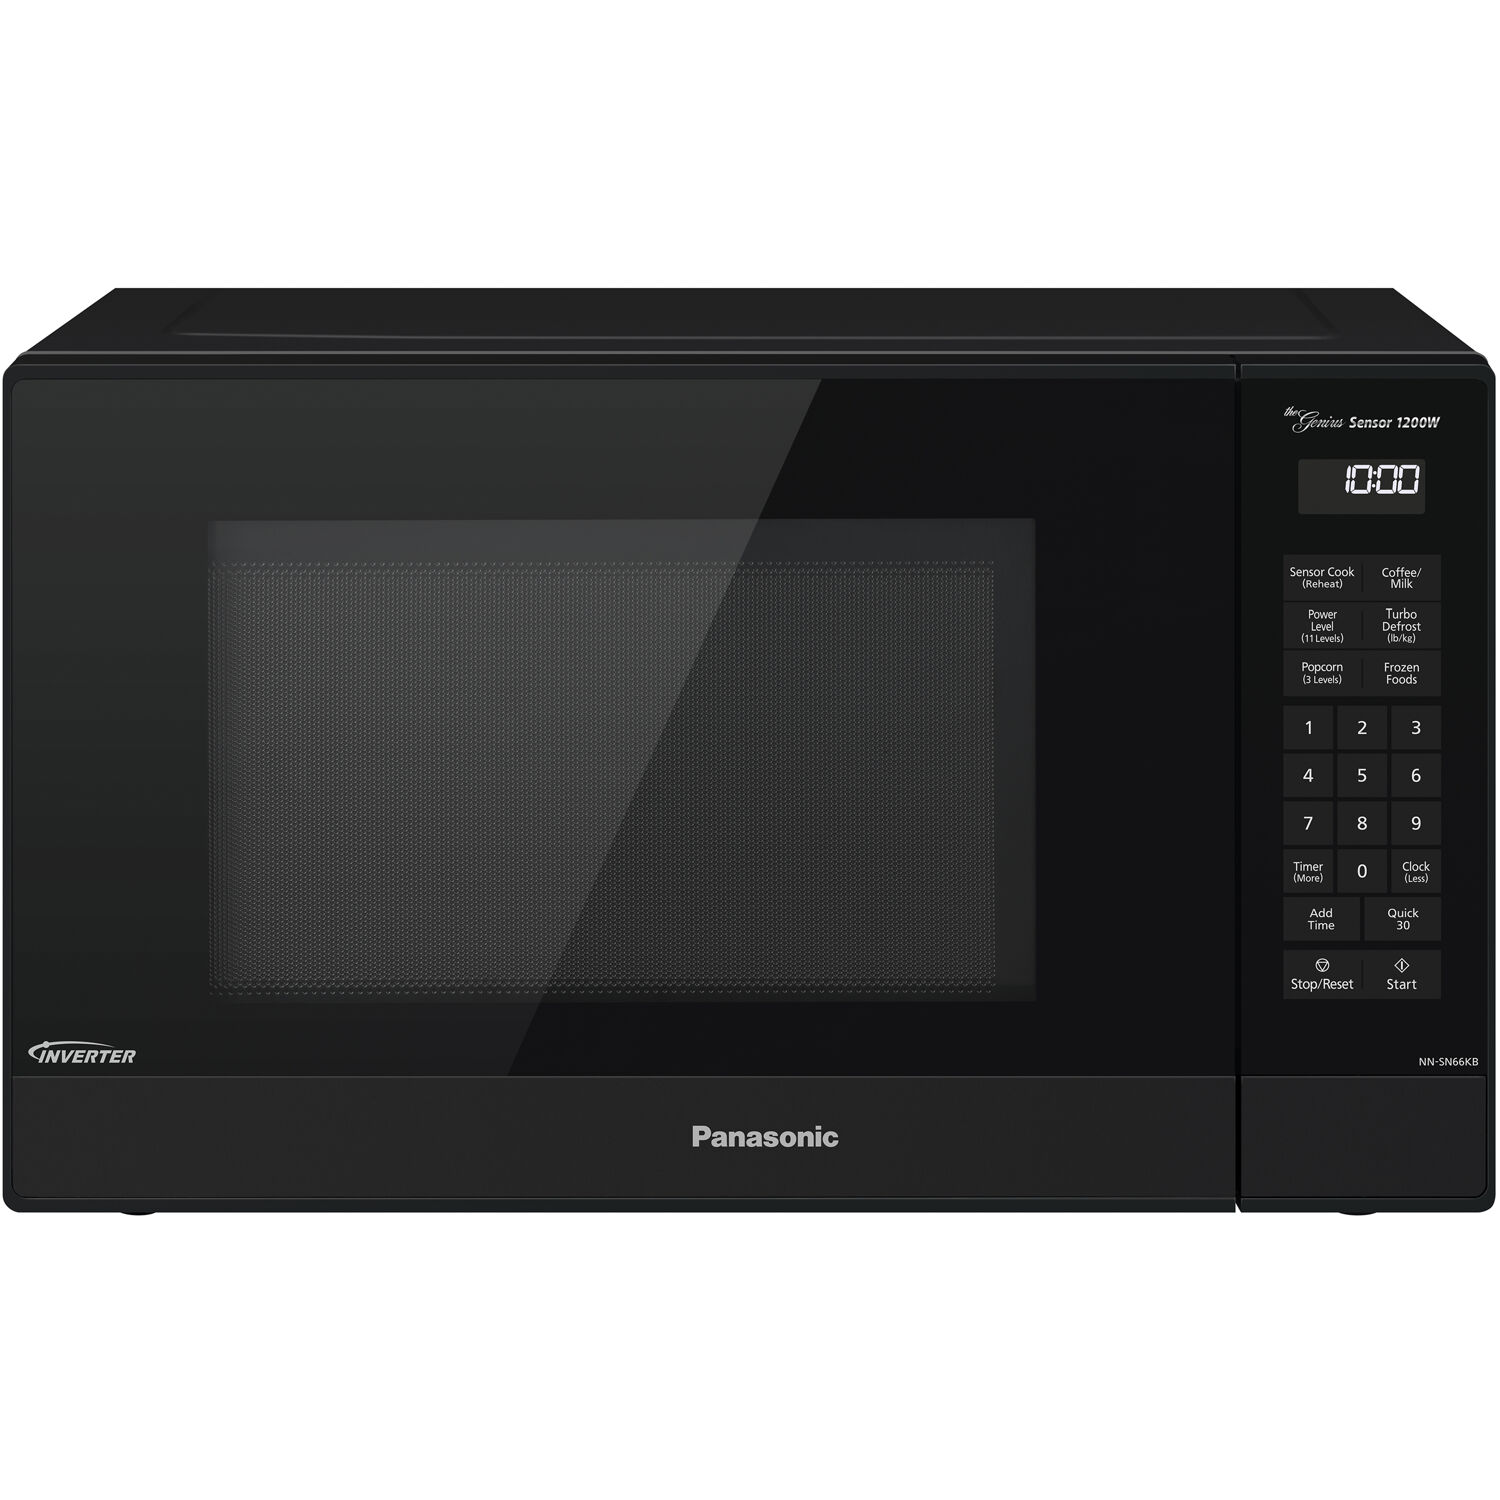 Panasonic 1.2 Cu. Ft. 1200W Genius Sensor Countertop Microwave Oven with Inverter Technology in Black - image 1 of 11